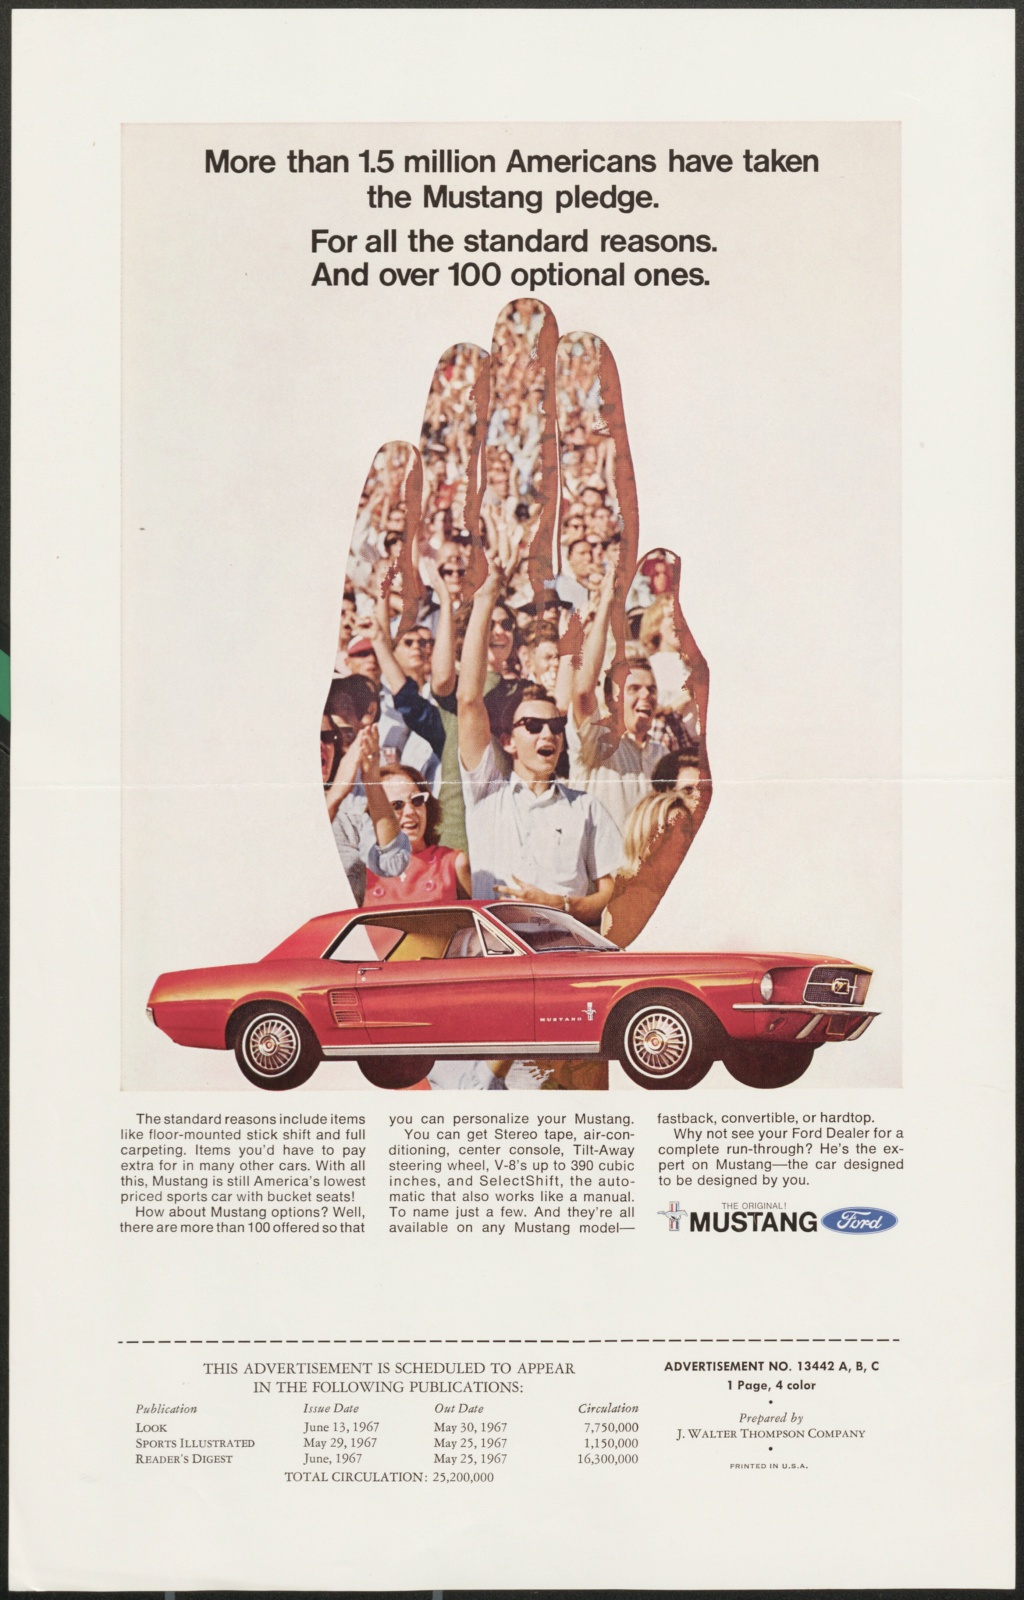 Publicité Mustang 1967 , collection J. Walter Thompson pour la Ford Motor Company.  Jwtad329